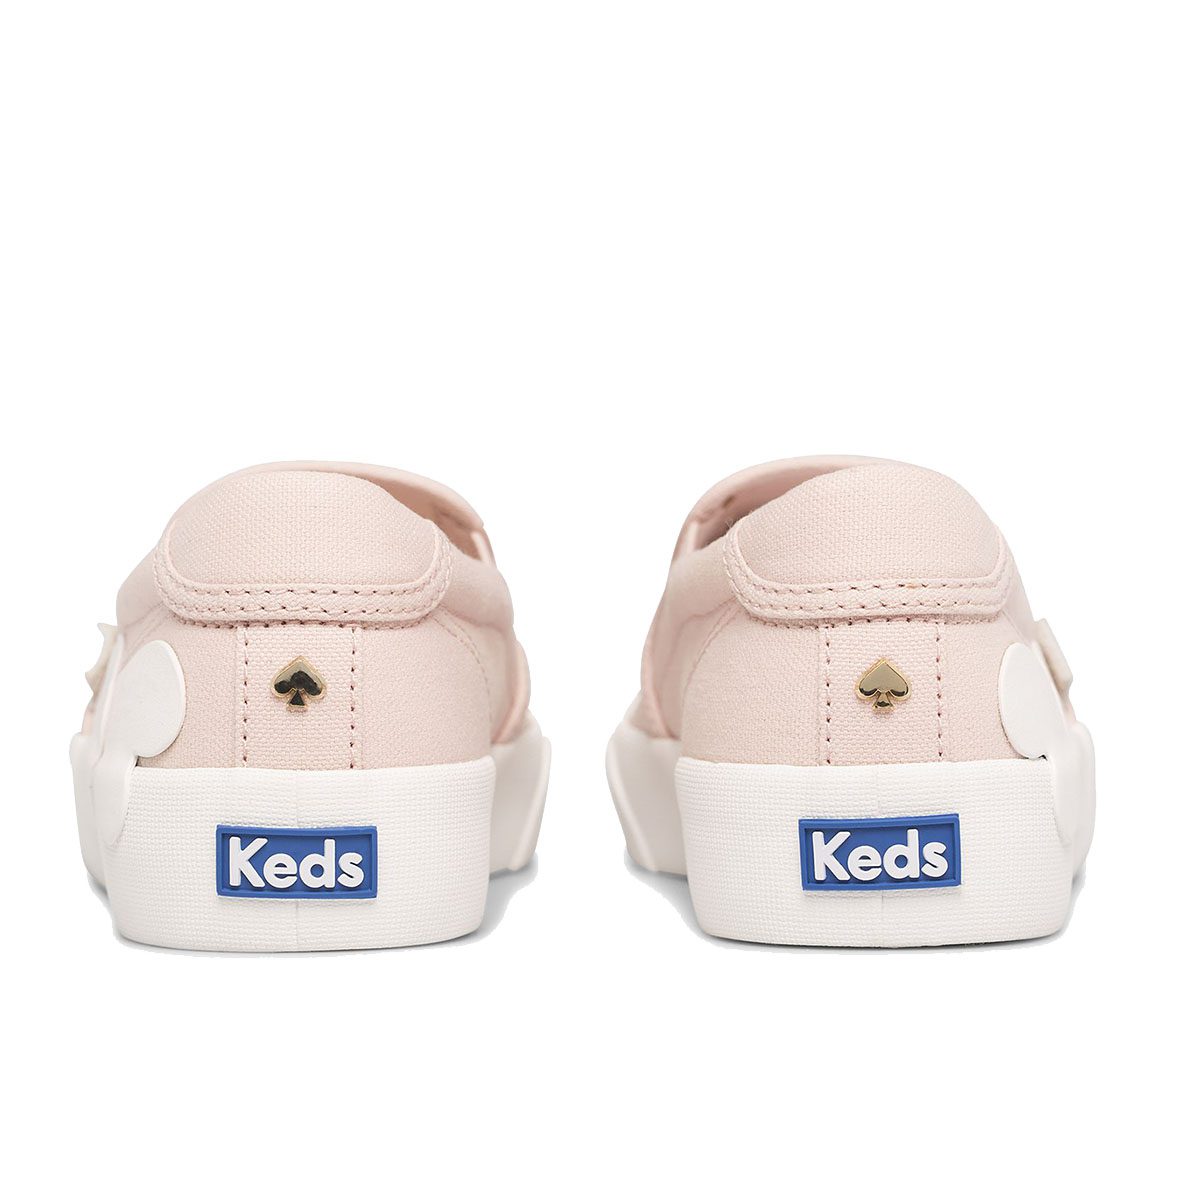 Keds x Kate Spade New York Crew Kick Pink Heart Slip-On Sneakers WF65105 -  